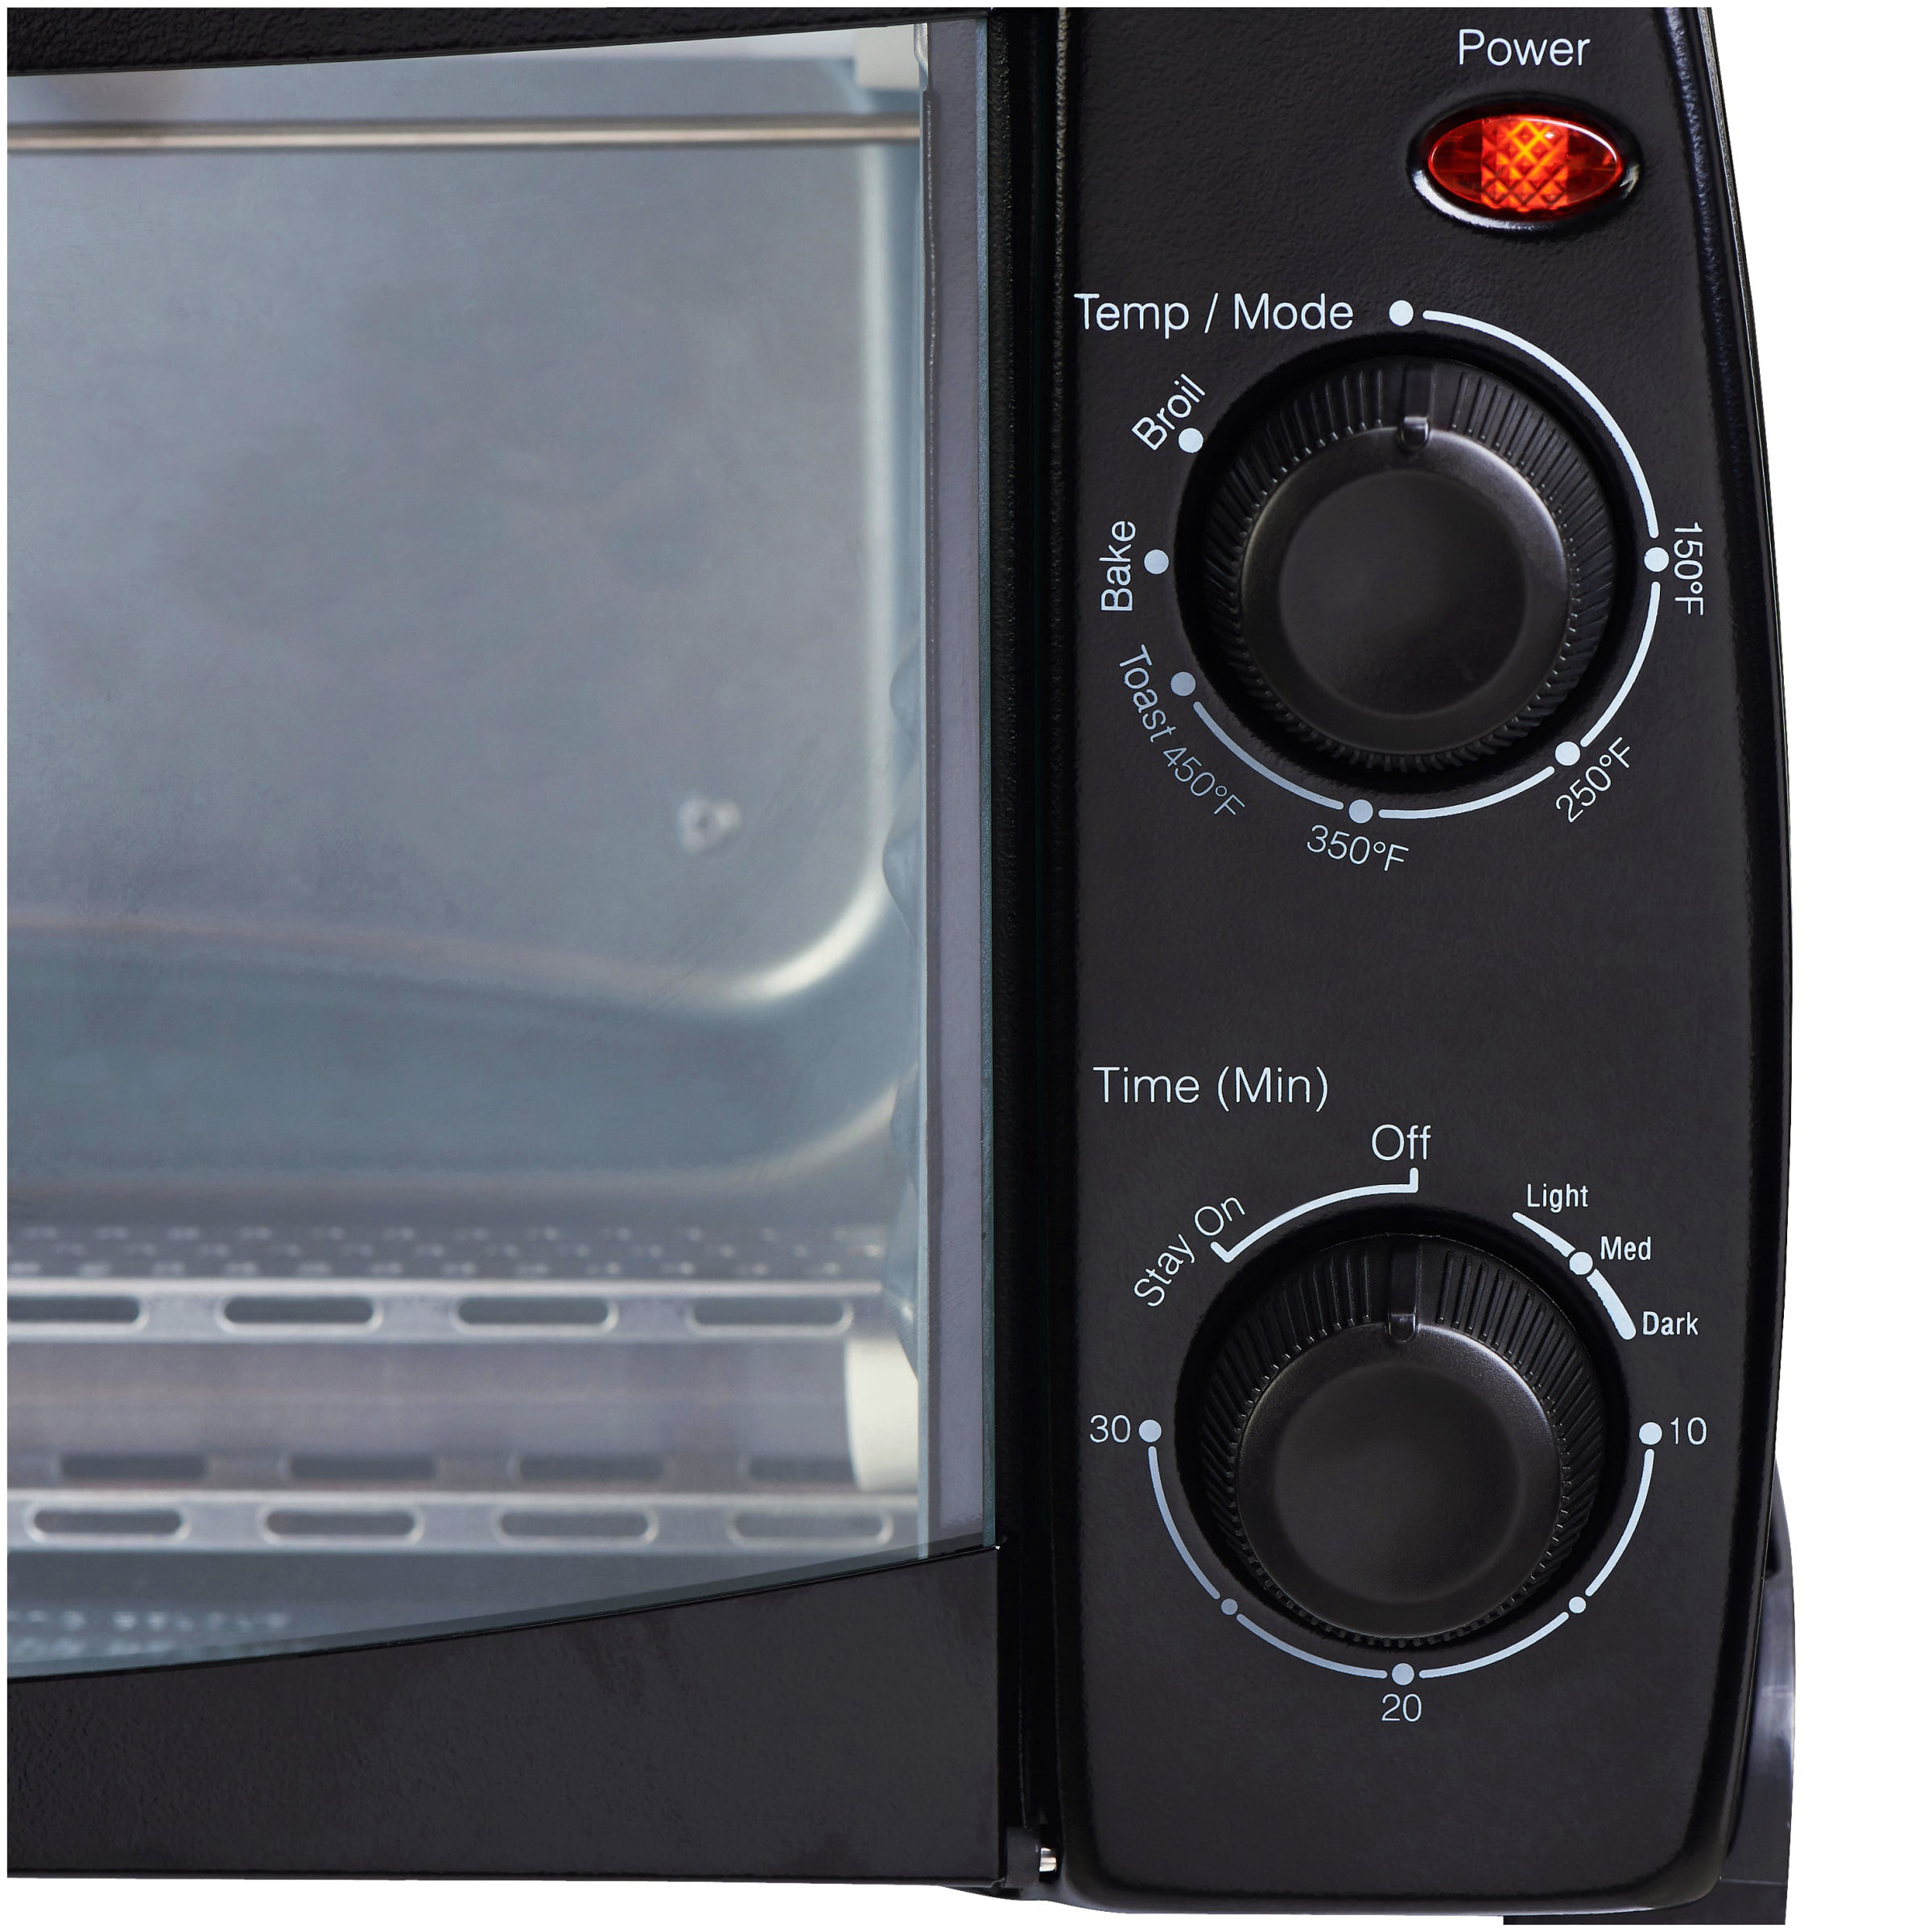 Mainstays 4 Slice Toaster Oven, Black 